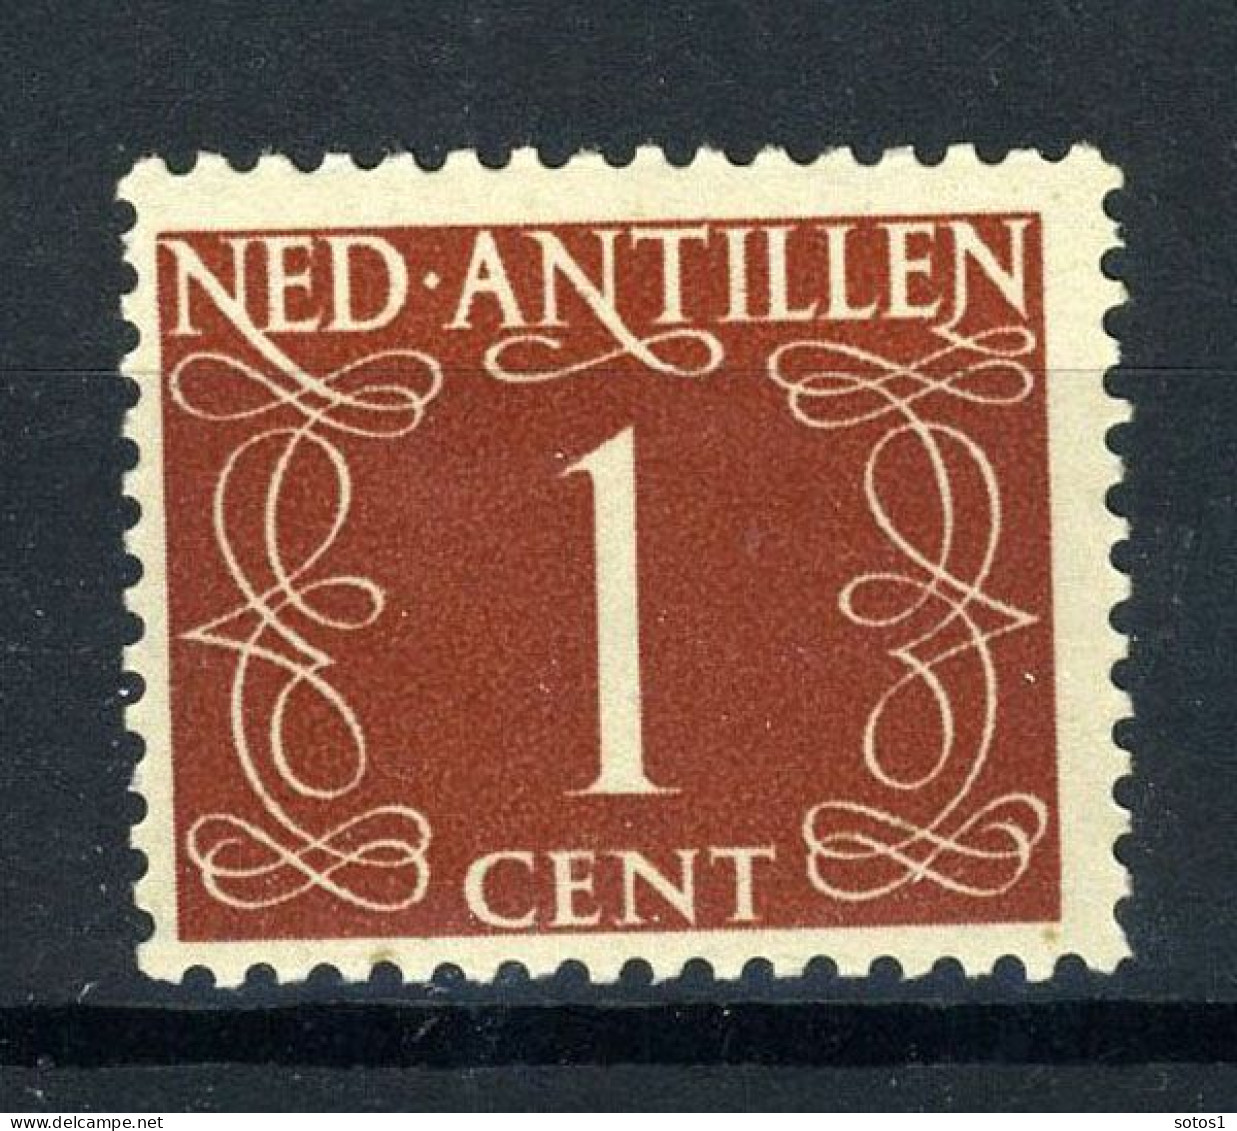 NL. ANTILLEN 211 MH 1950 - Cijfer. - Niederländische Antillen, Curaçao, Aruba